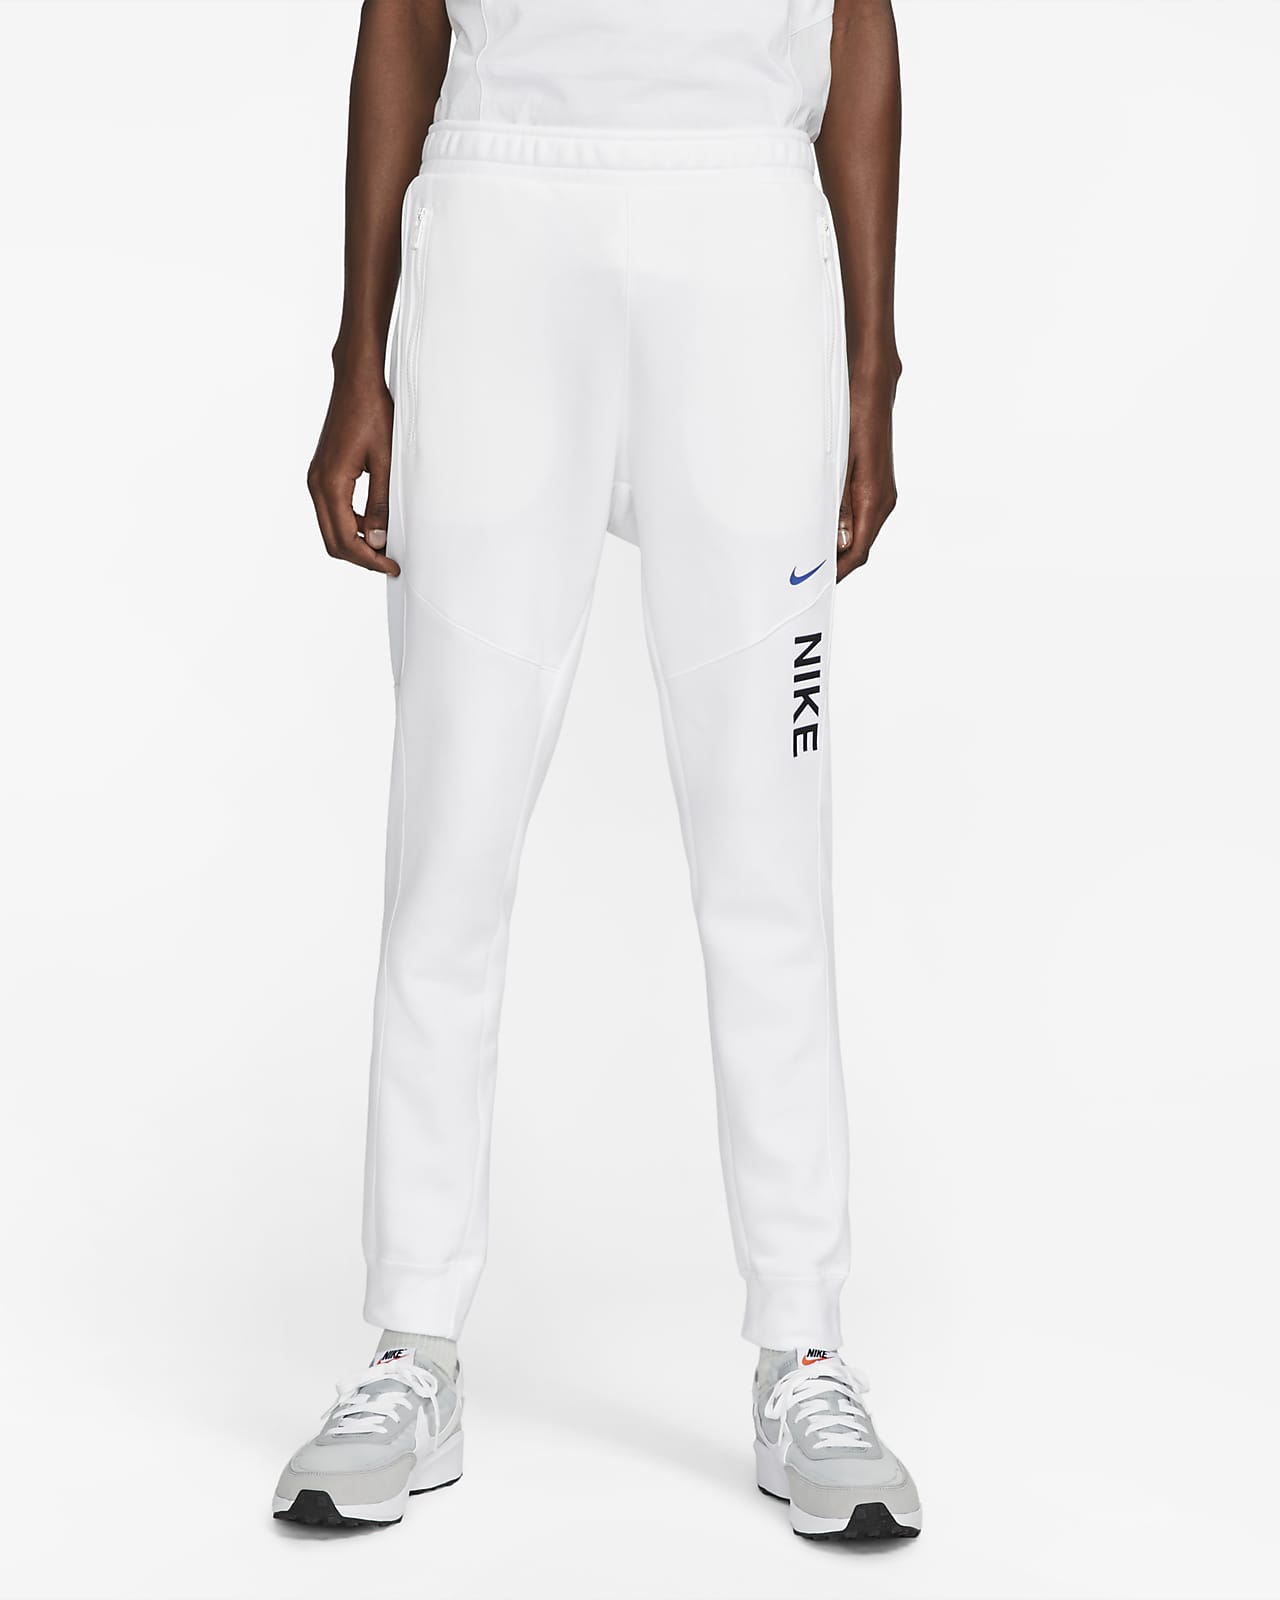 Nike Sportswear PANT UNISEX - Tracksuit bottoms - black/white/black -  Zalando.de